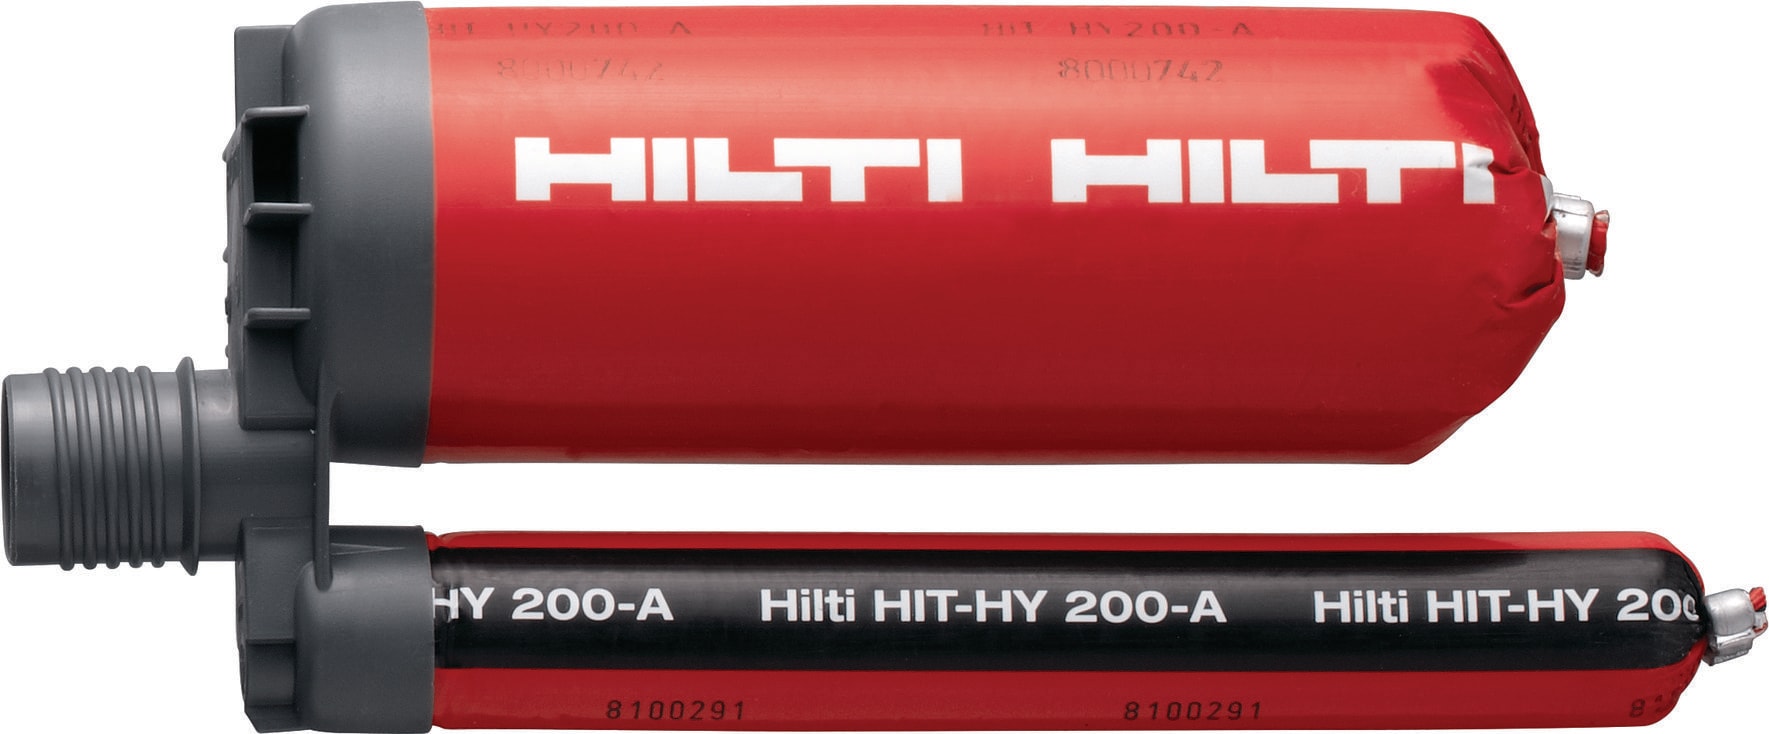 HIT-HY 200-A 接着系アンカー - 接着系注入方式アンカー - Hilti Japan